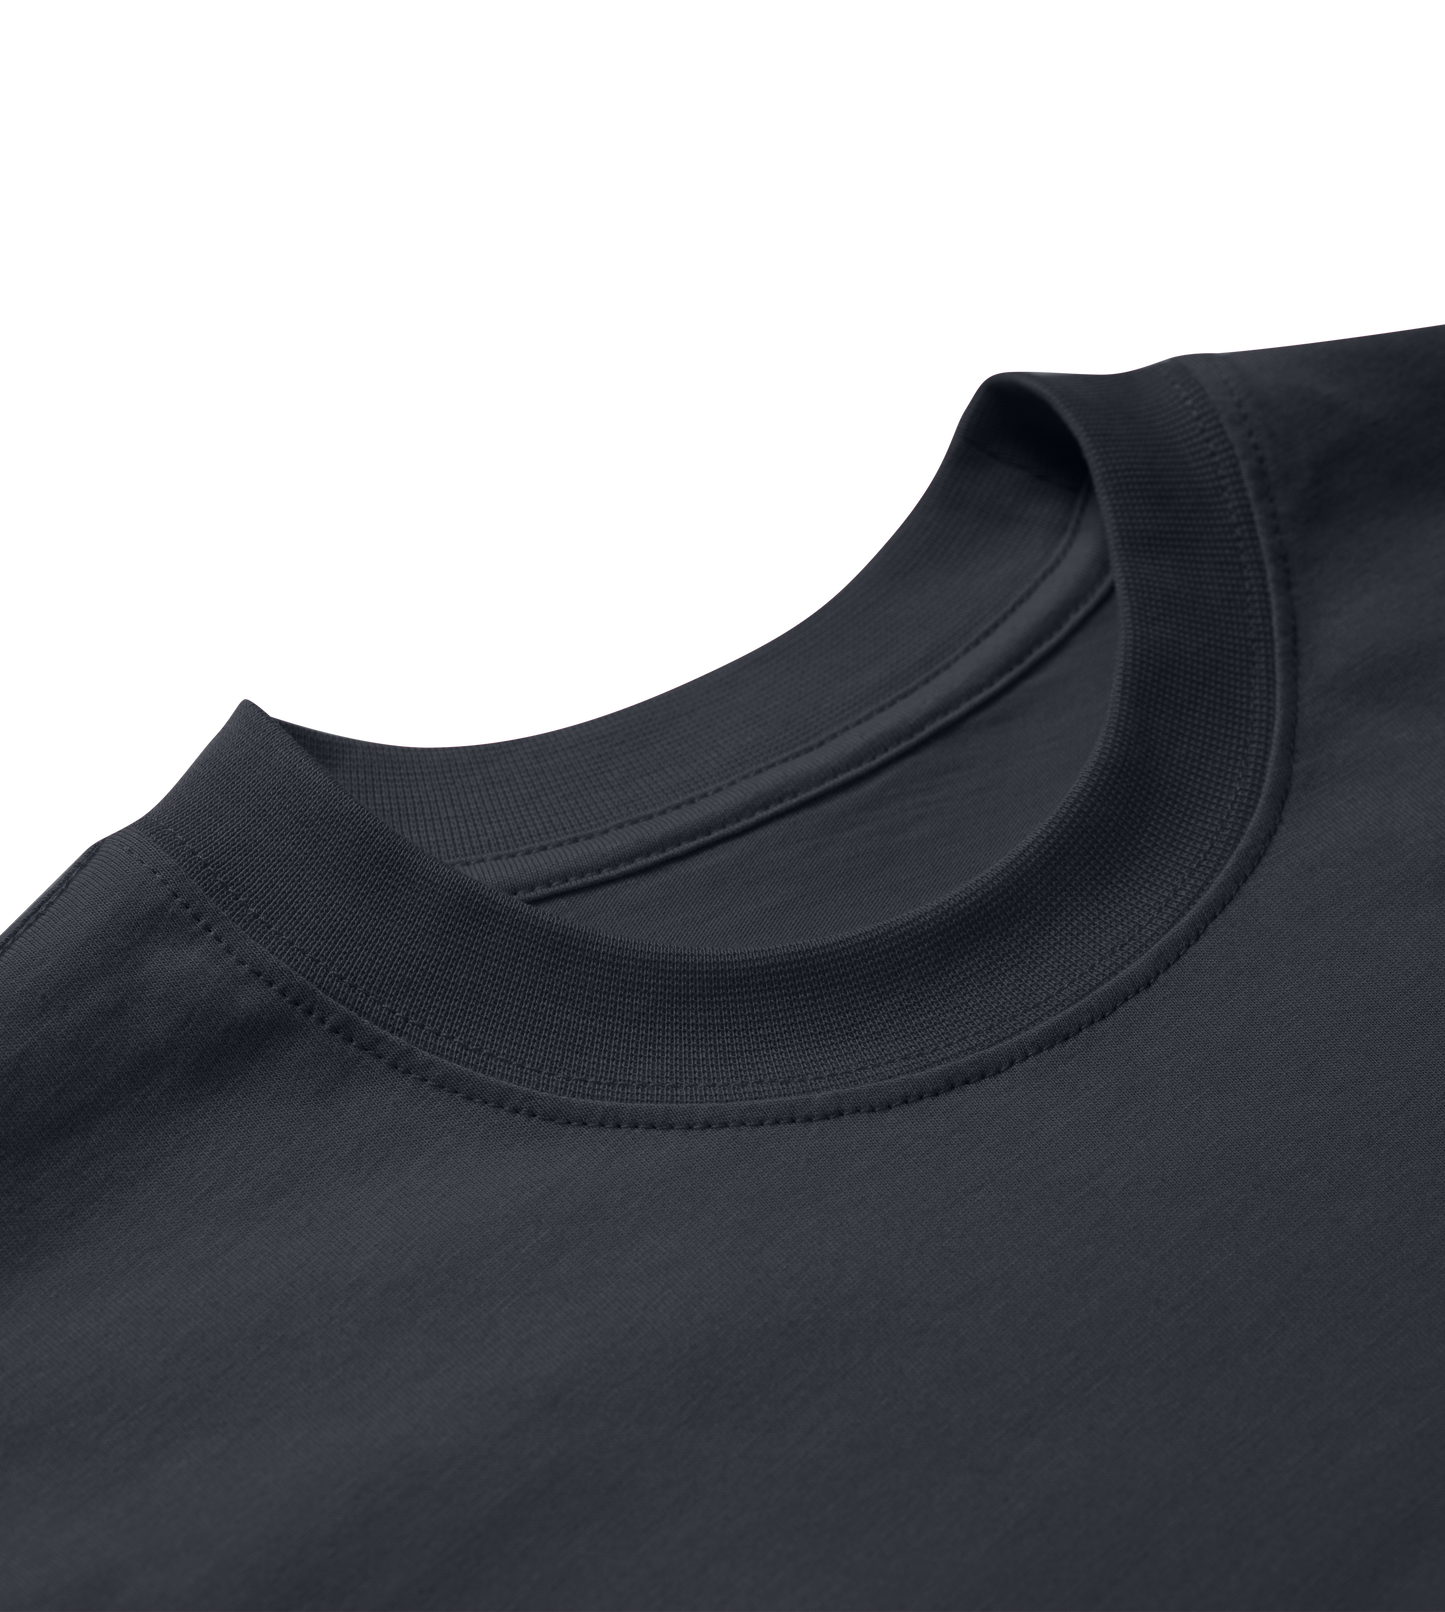 RMMR OFF-BLACK - Oversize Unisex Organic Cotton T-Shirt